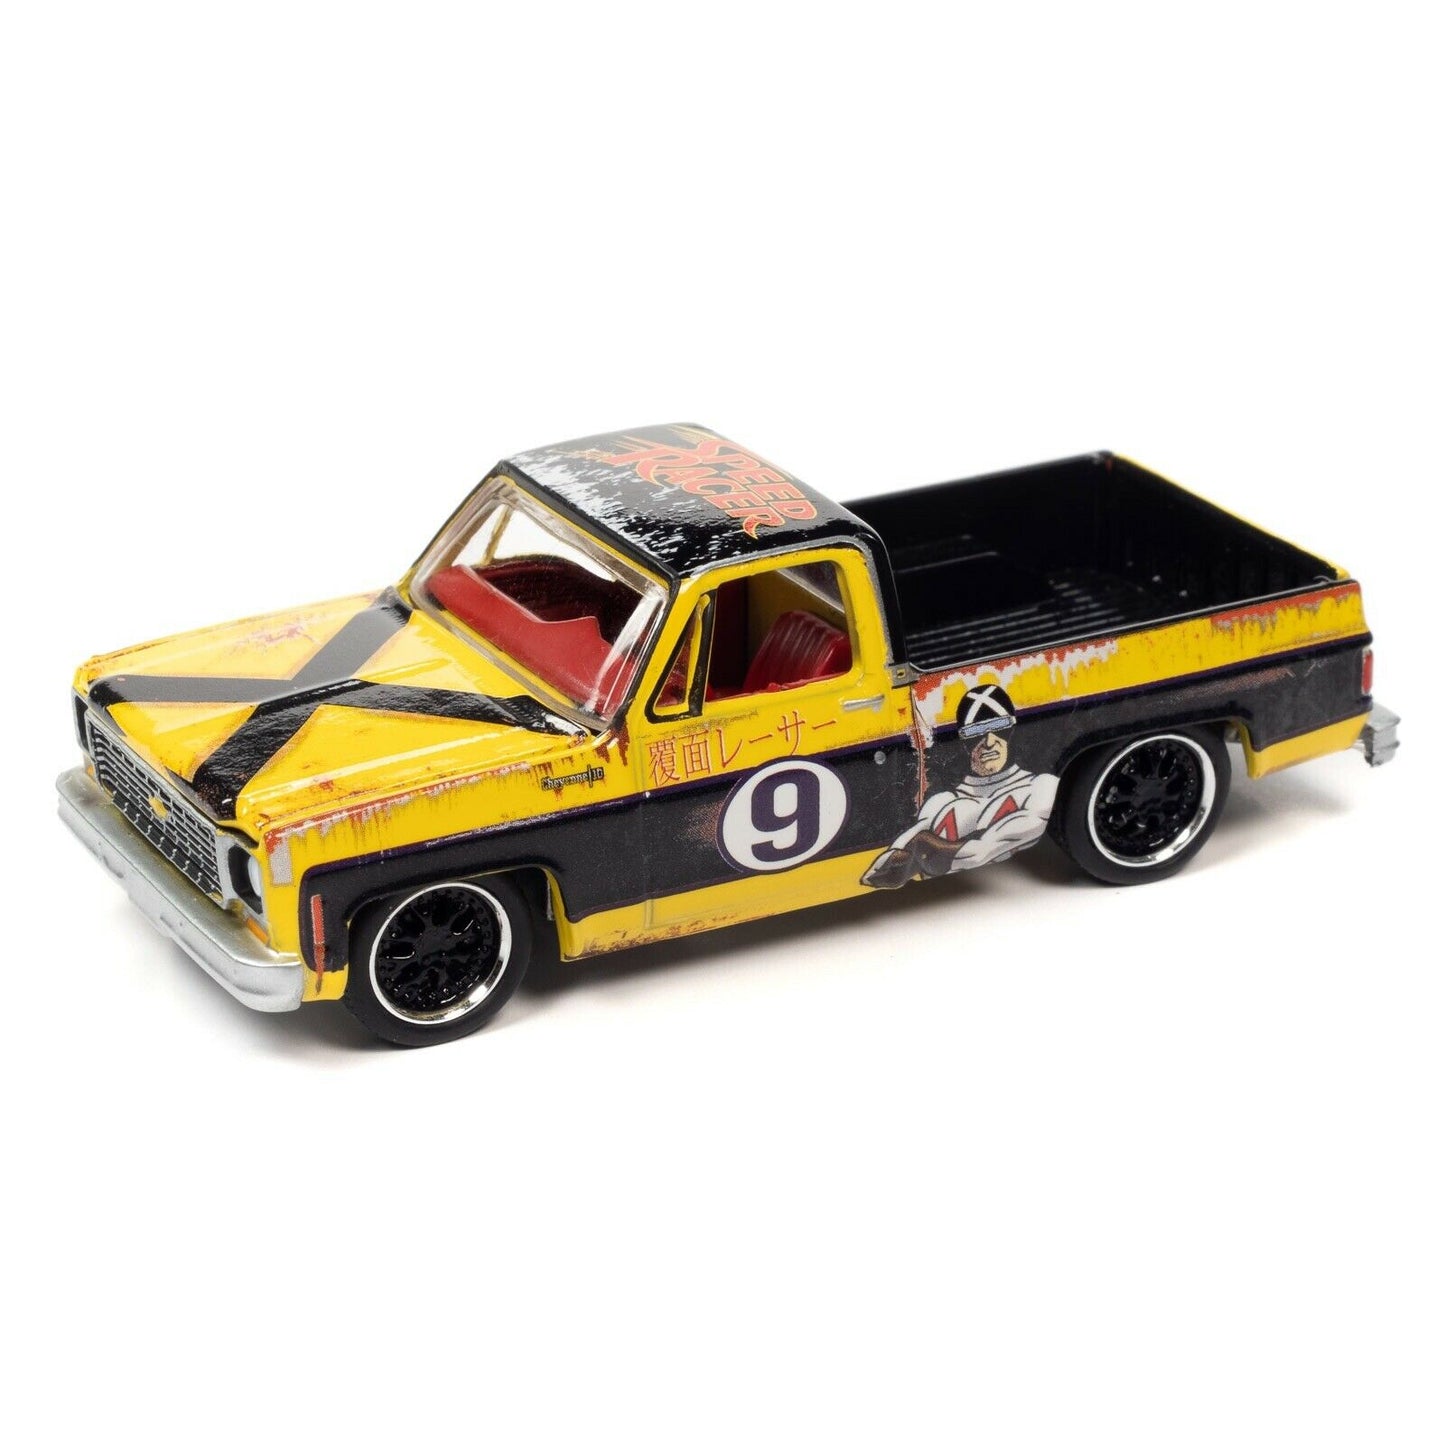 Auto World Exclusives Speed Racer #9 1973 Chevrolet Cheyenne C10 Black Yellow 1:64